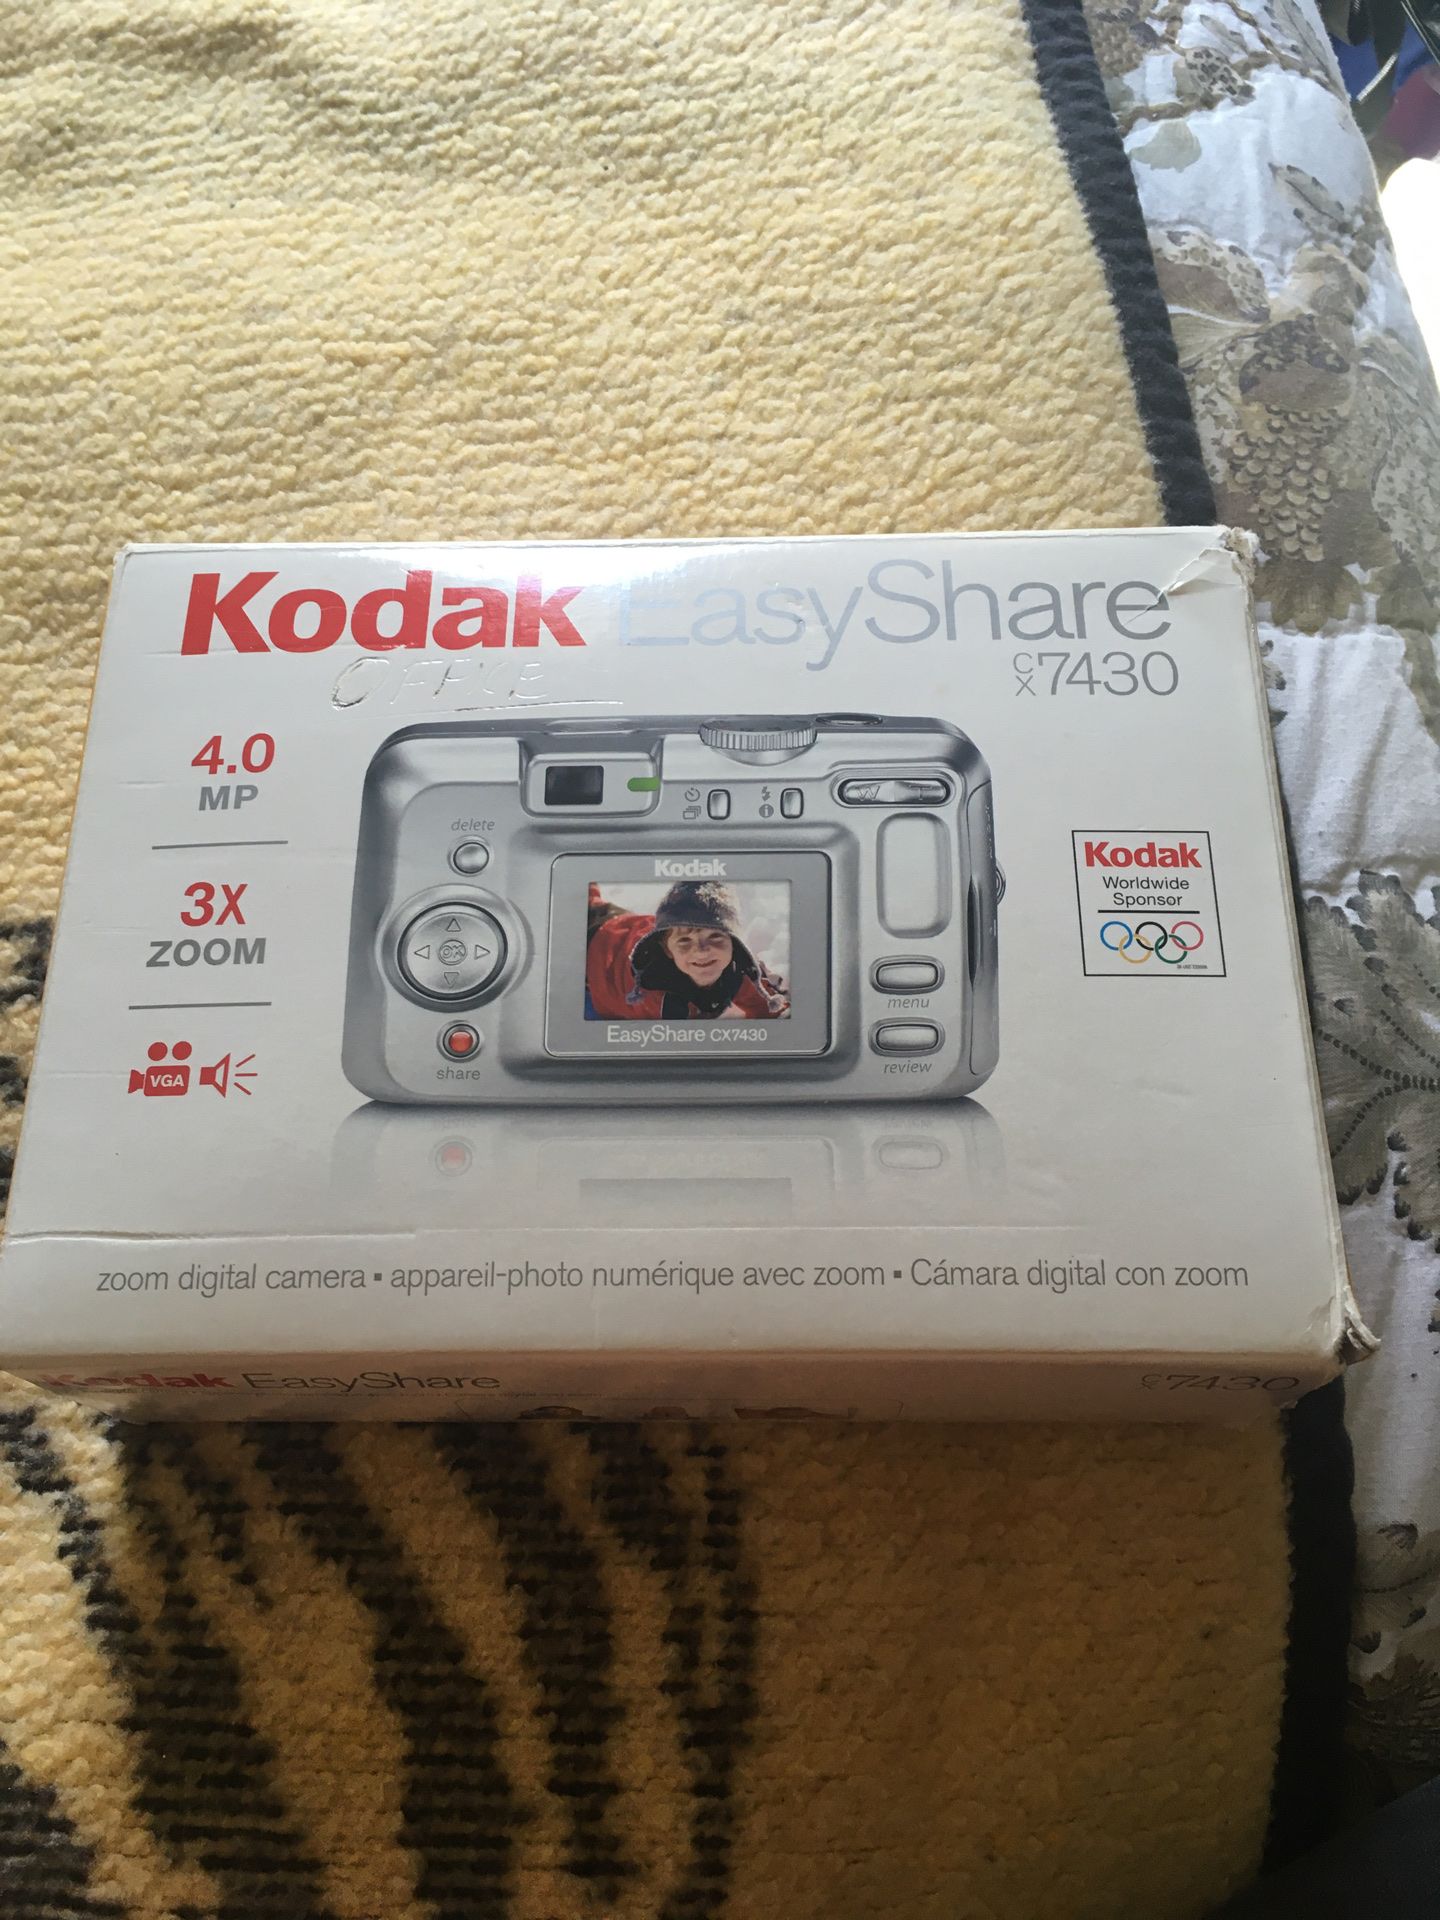 Kodak EasyShare CX7430 digital camera